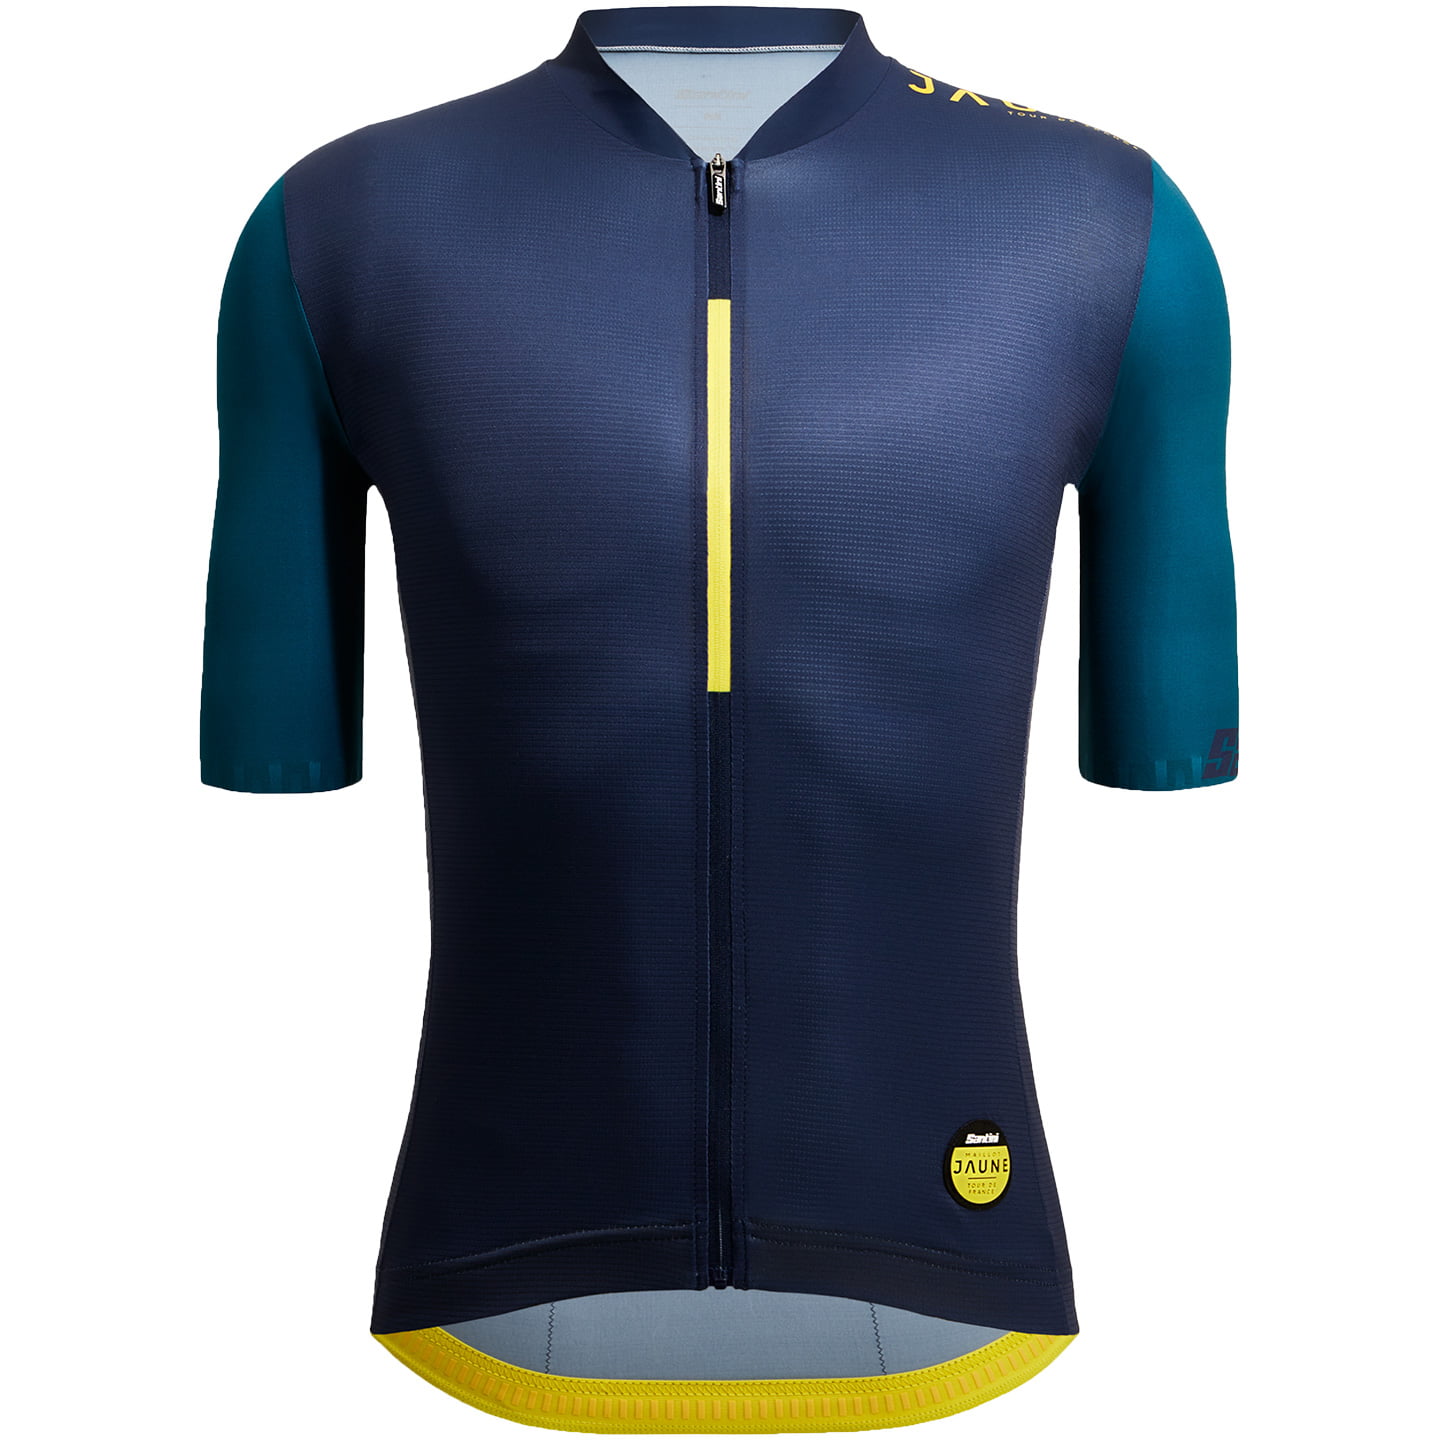 TOUR DE FRANCE Le Maillot Jaune Allez 2023 Short Sleeve Jersey, for men, size L, Cycling shirt, Cycle clothing